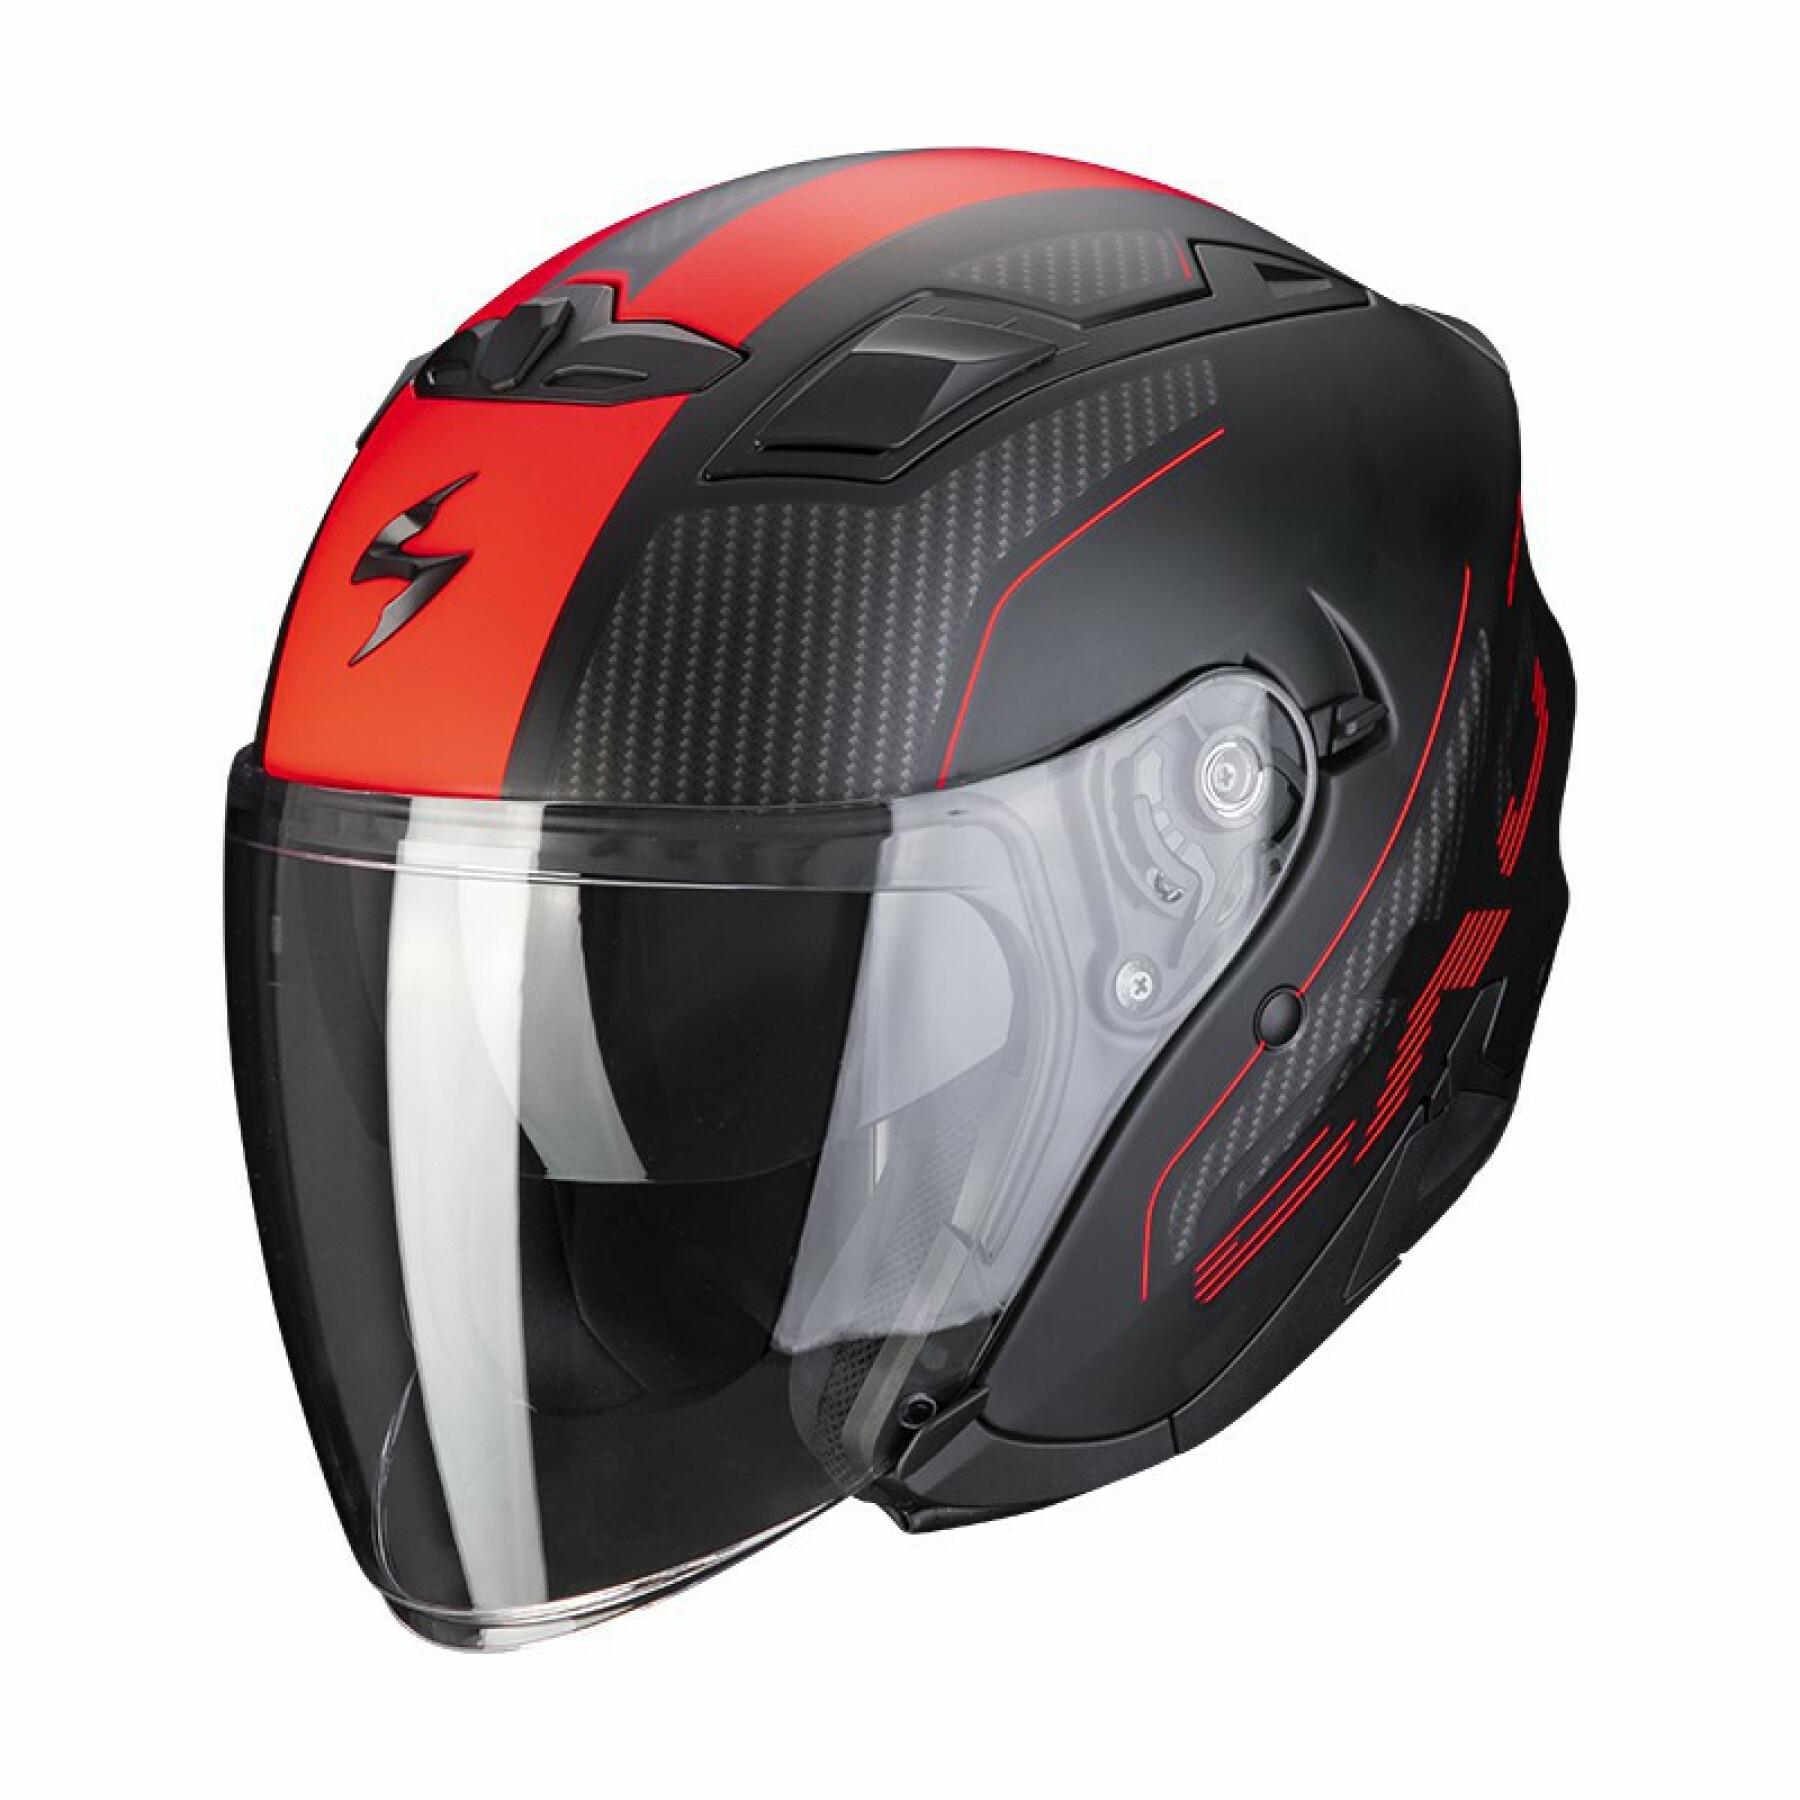 Jet helmet Scorpion Exo-230 CONDOR